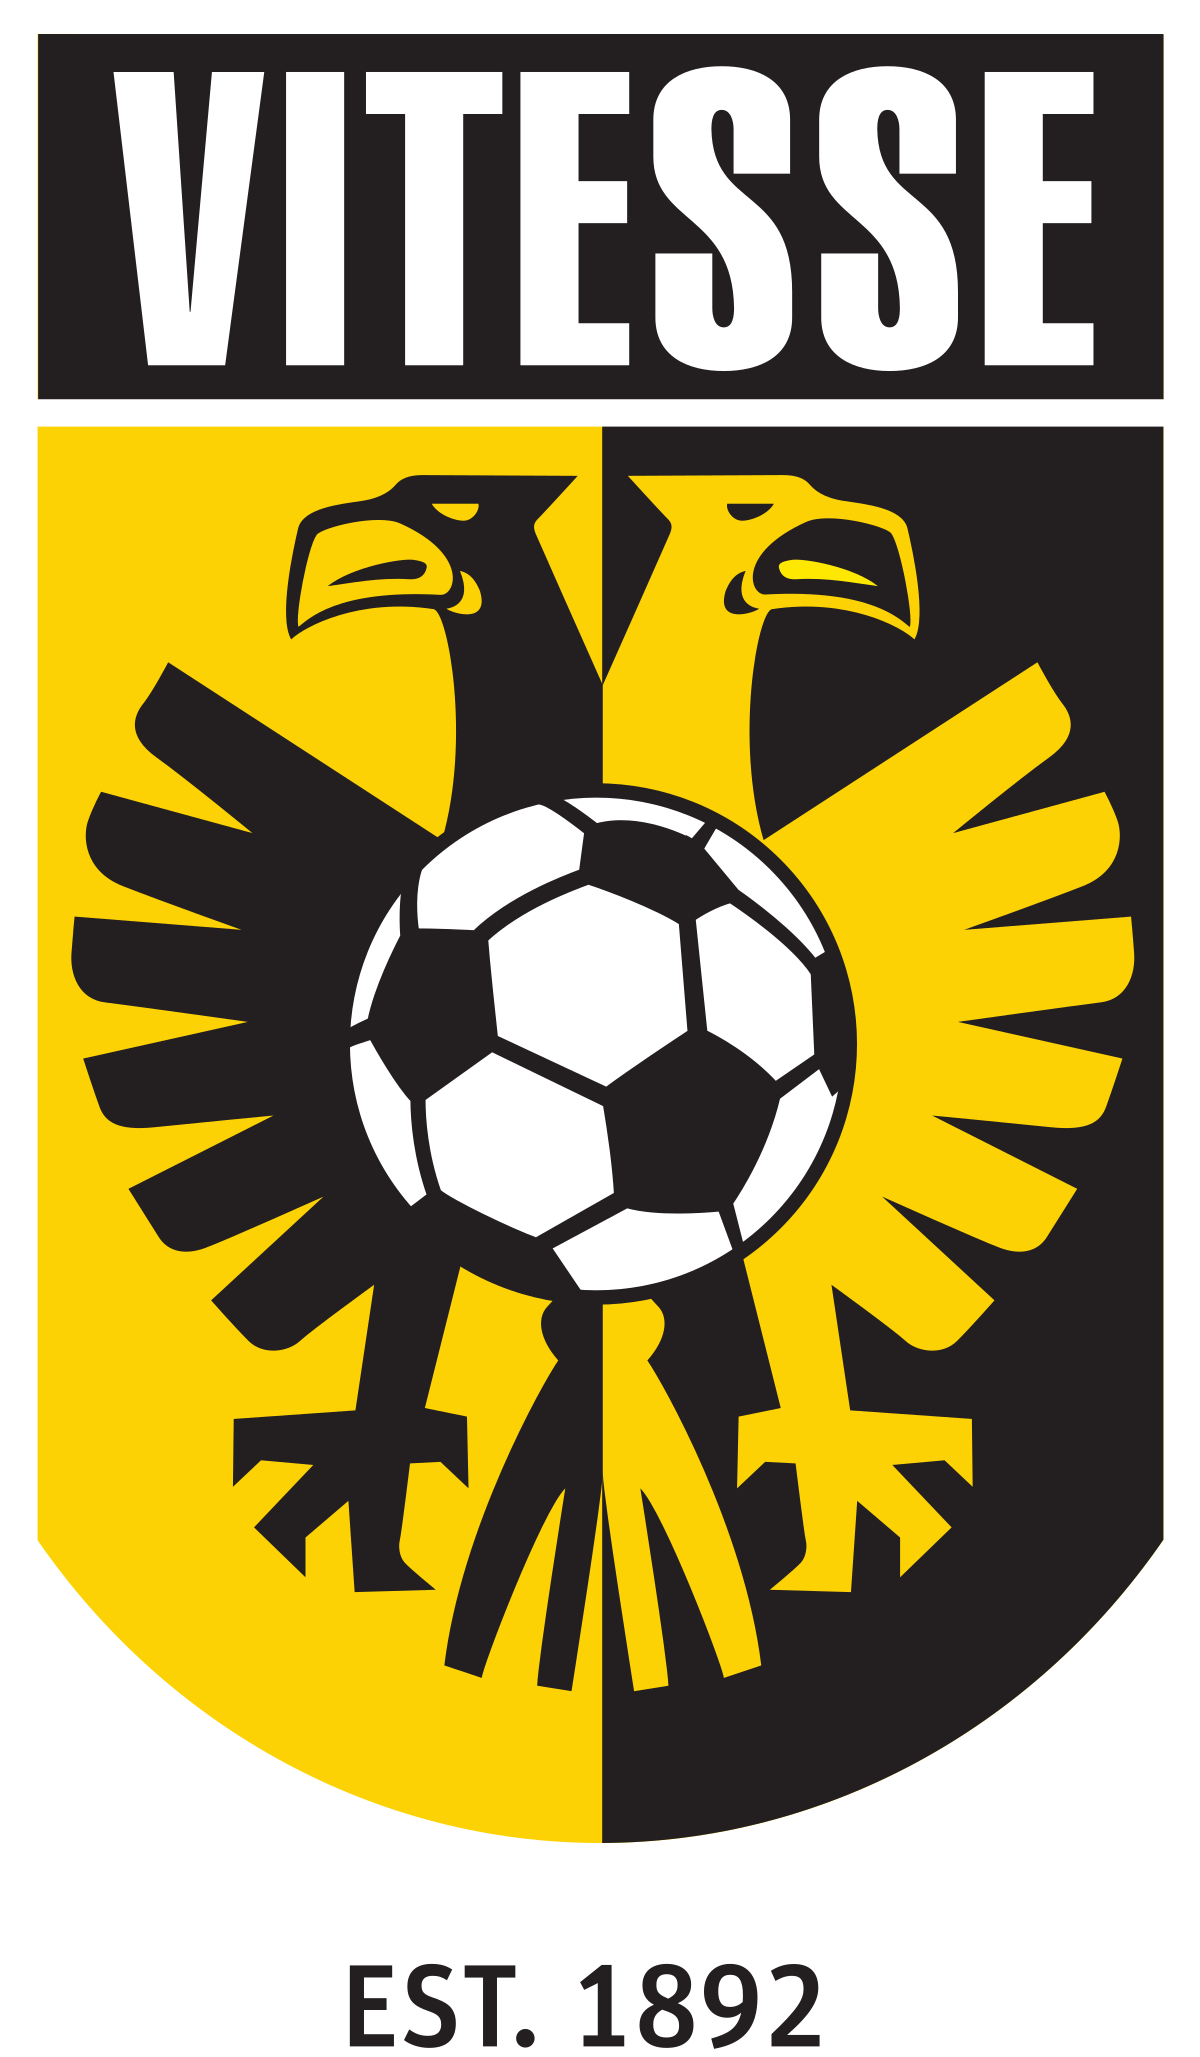 BV Vitesse